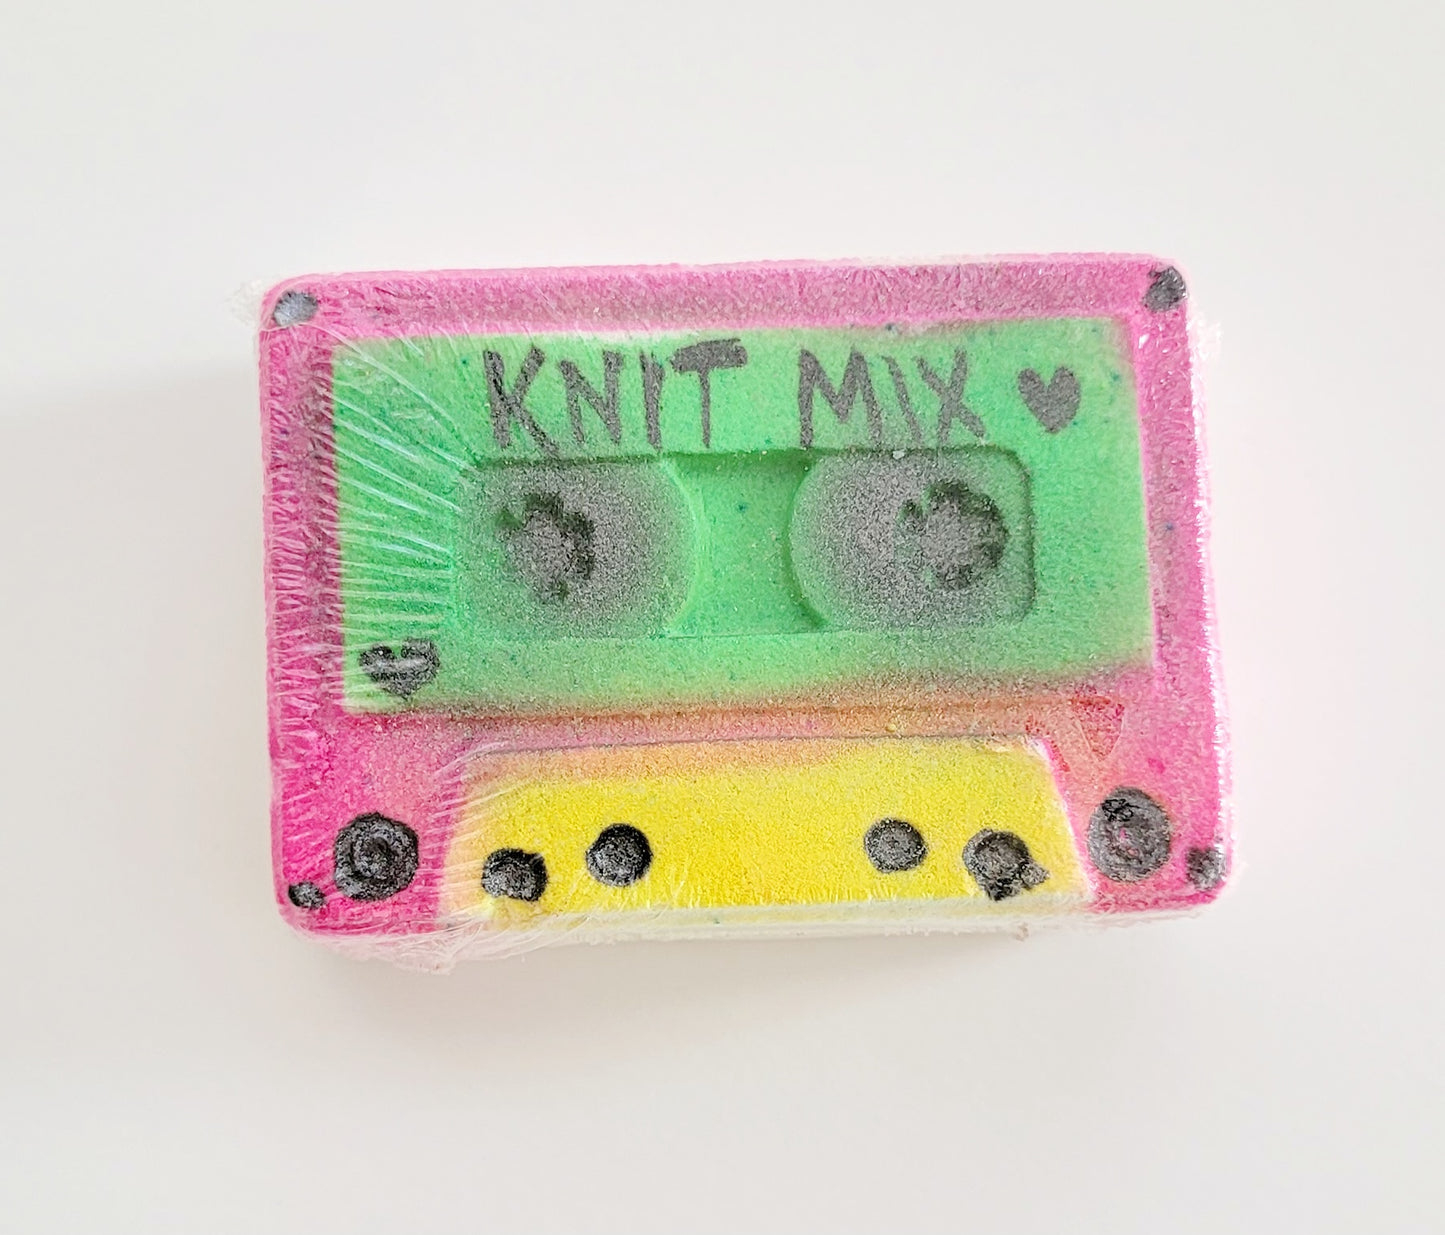 Knit Mix Bath Bomb / Ready to Ship